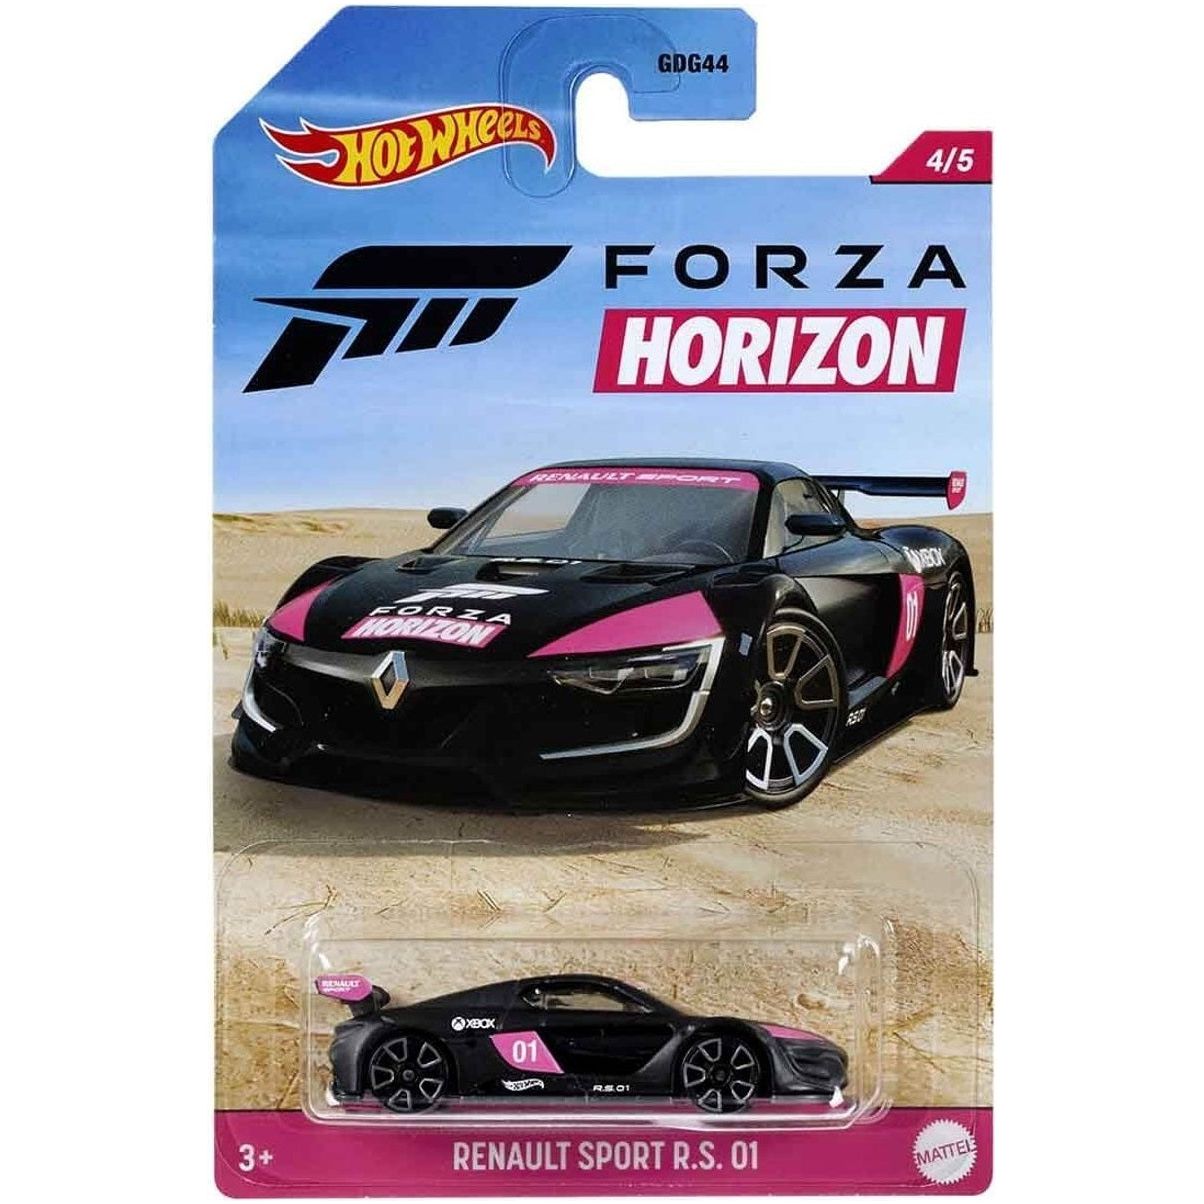 HotWheels | Forza Horizon | 4/5 Renault Sport R.S. 01 | GDG44